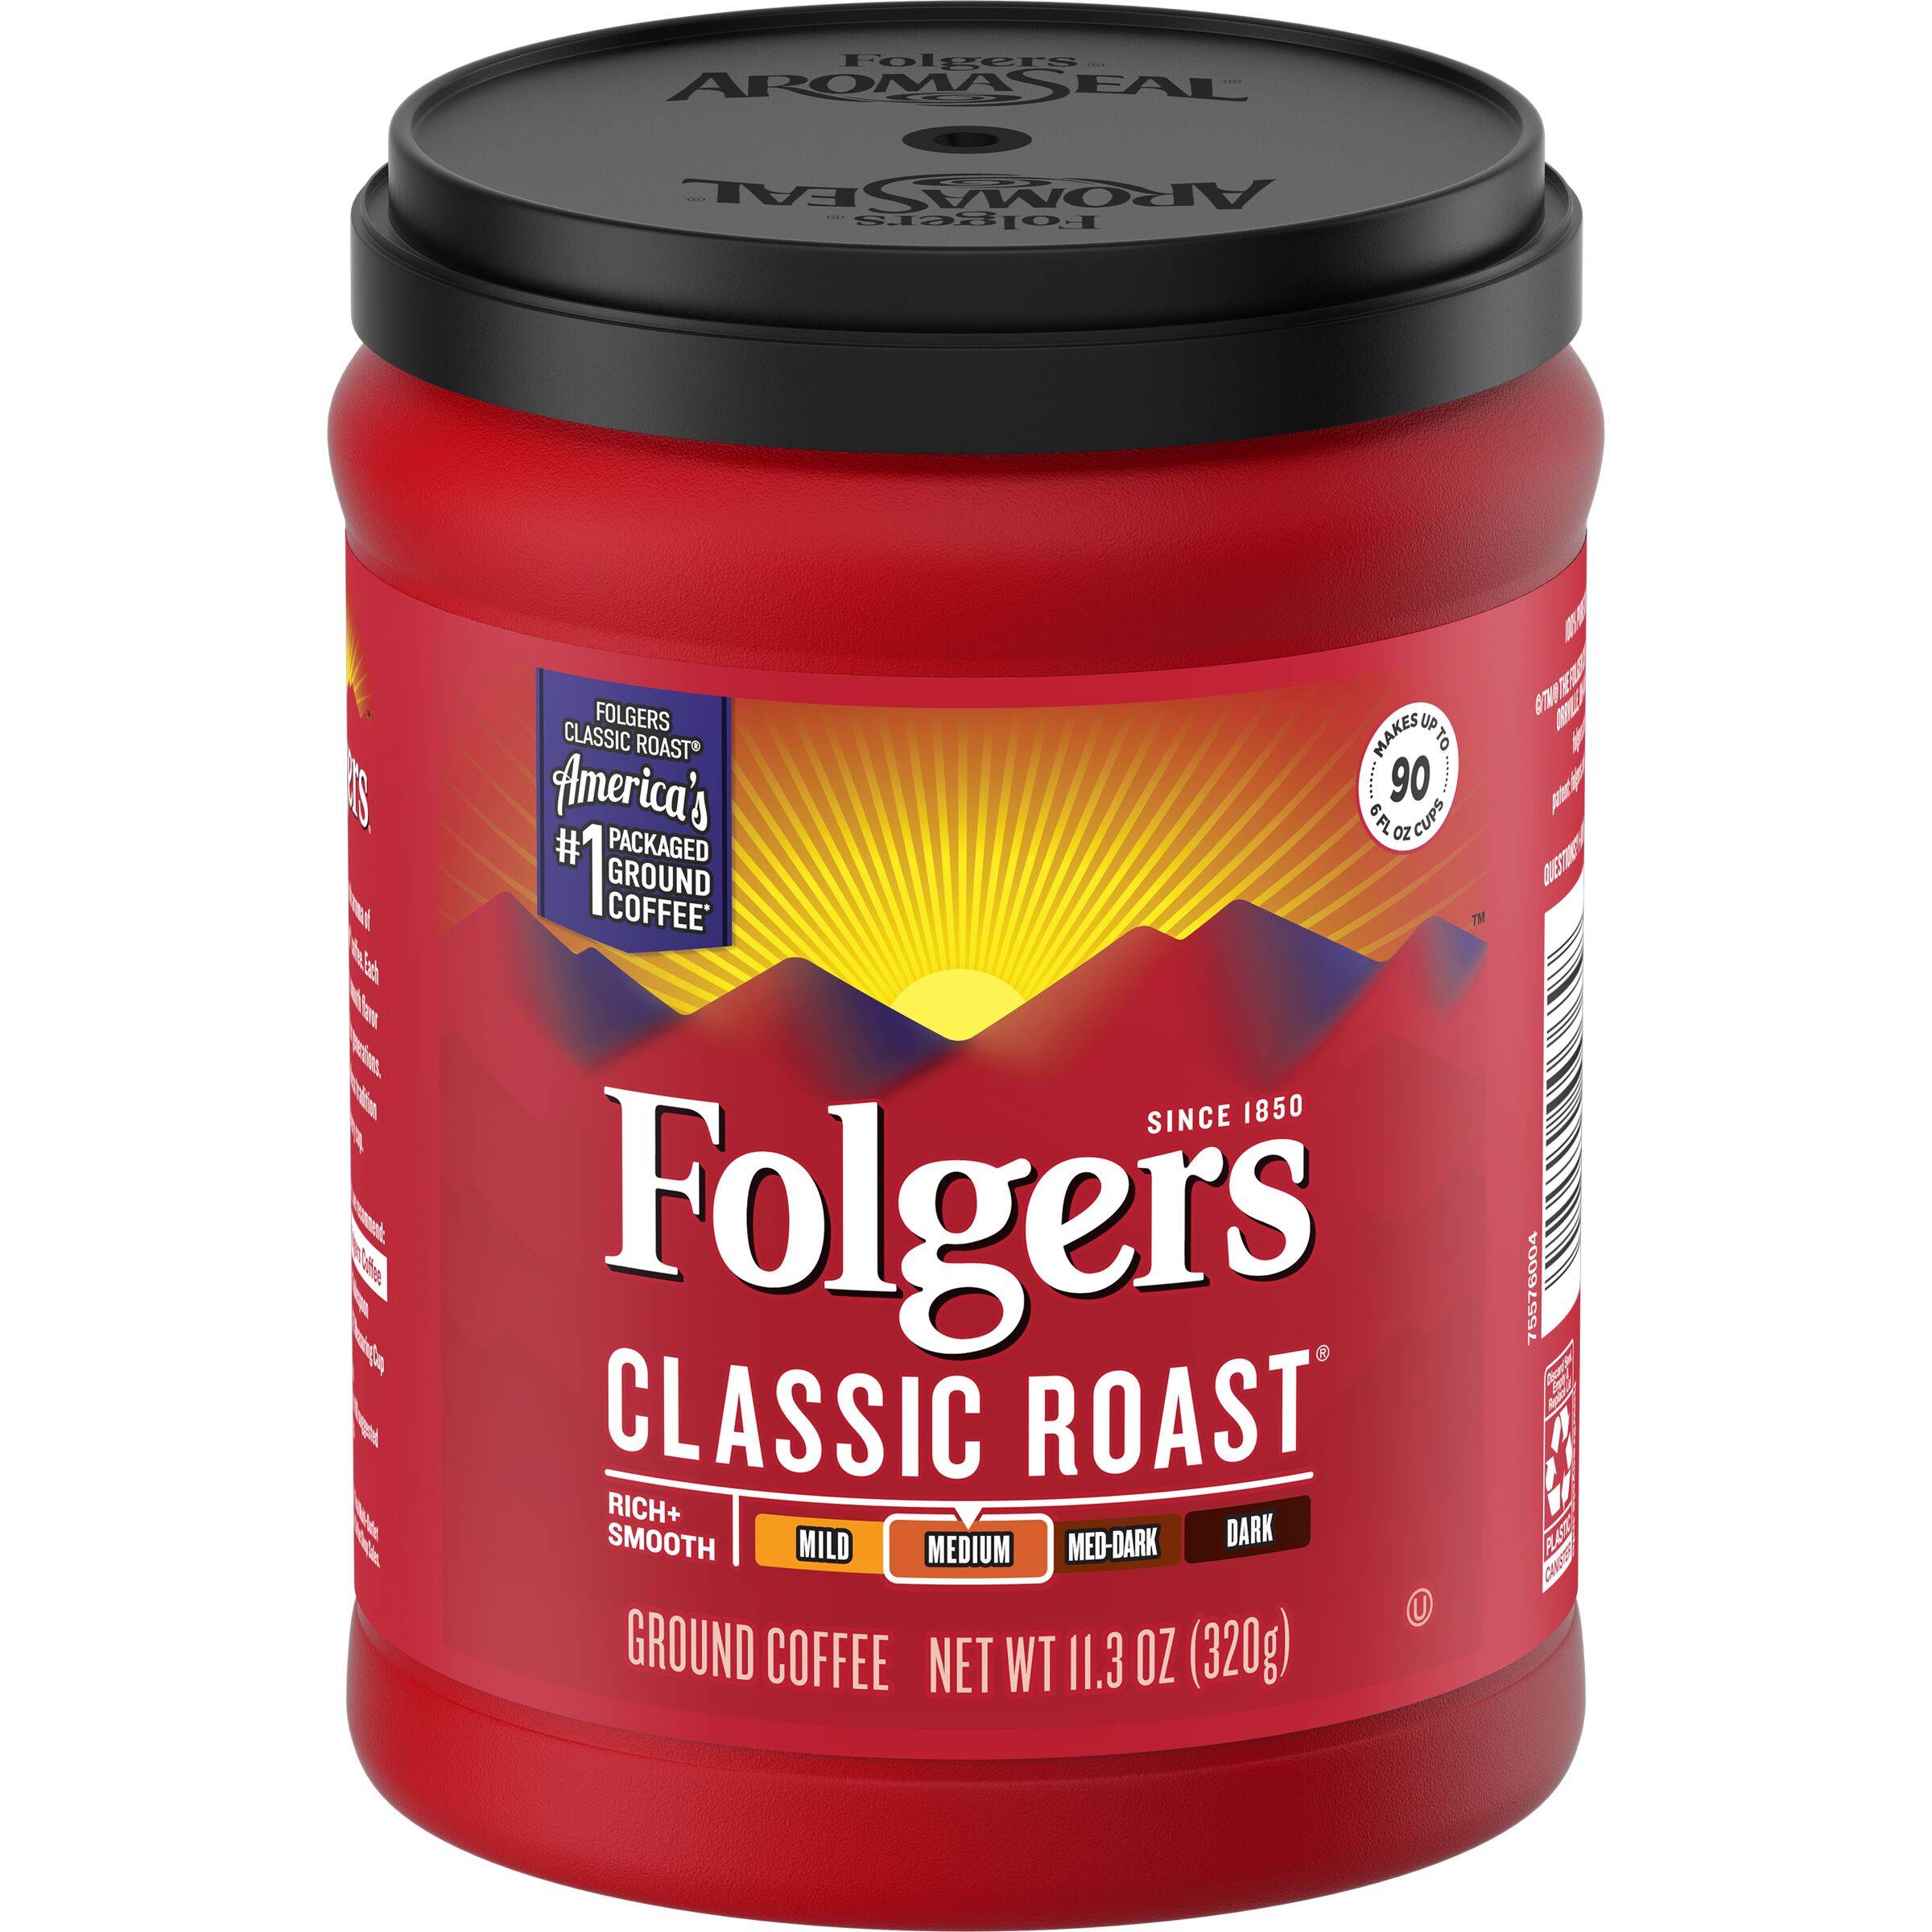 Folgers Classic Roast Ground Coffee, Medium Roast, 11.3-Ounce - image 1 of 4